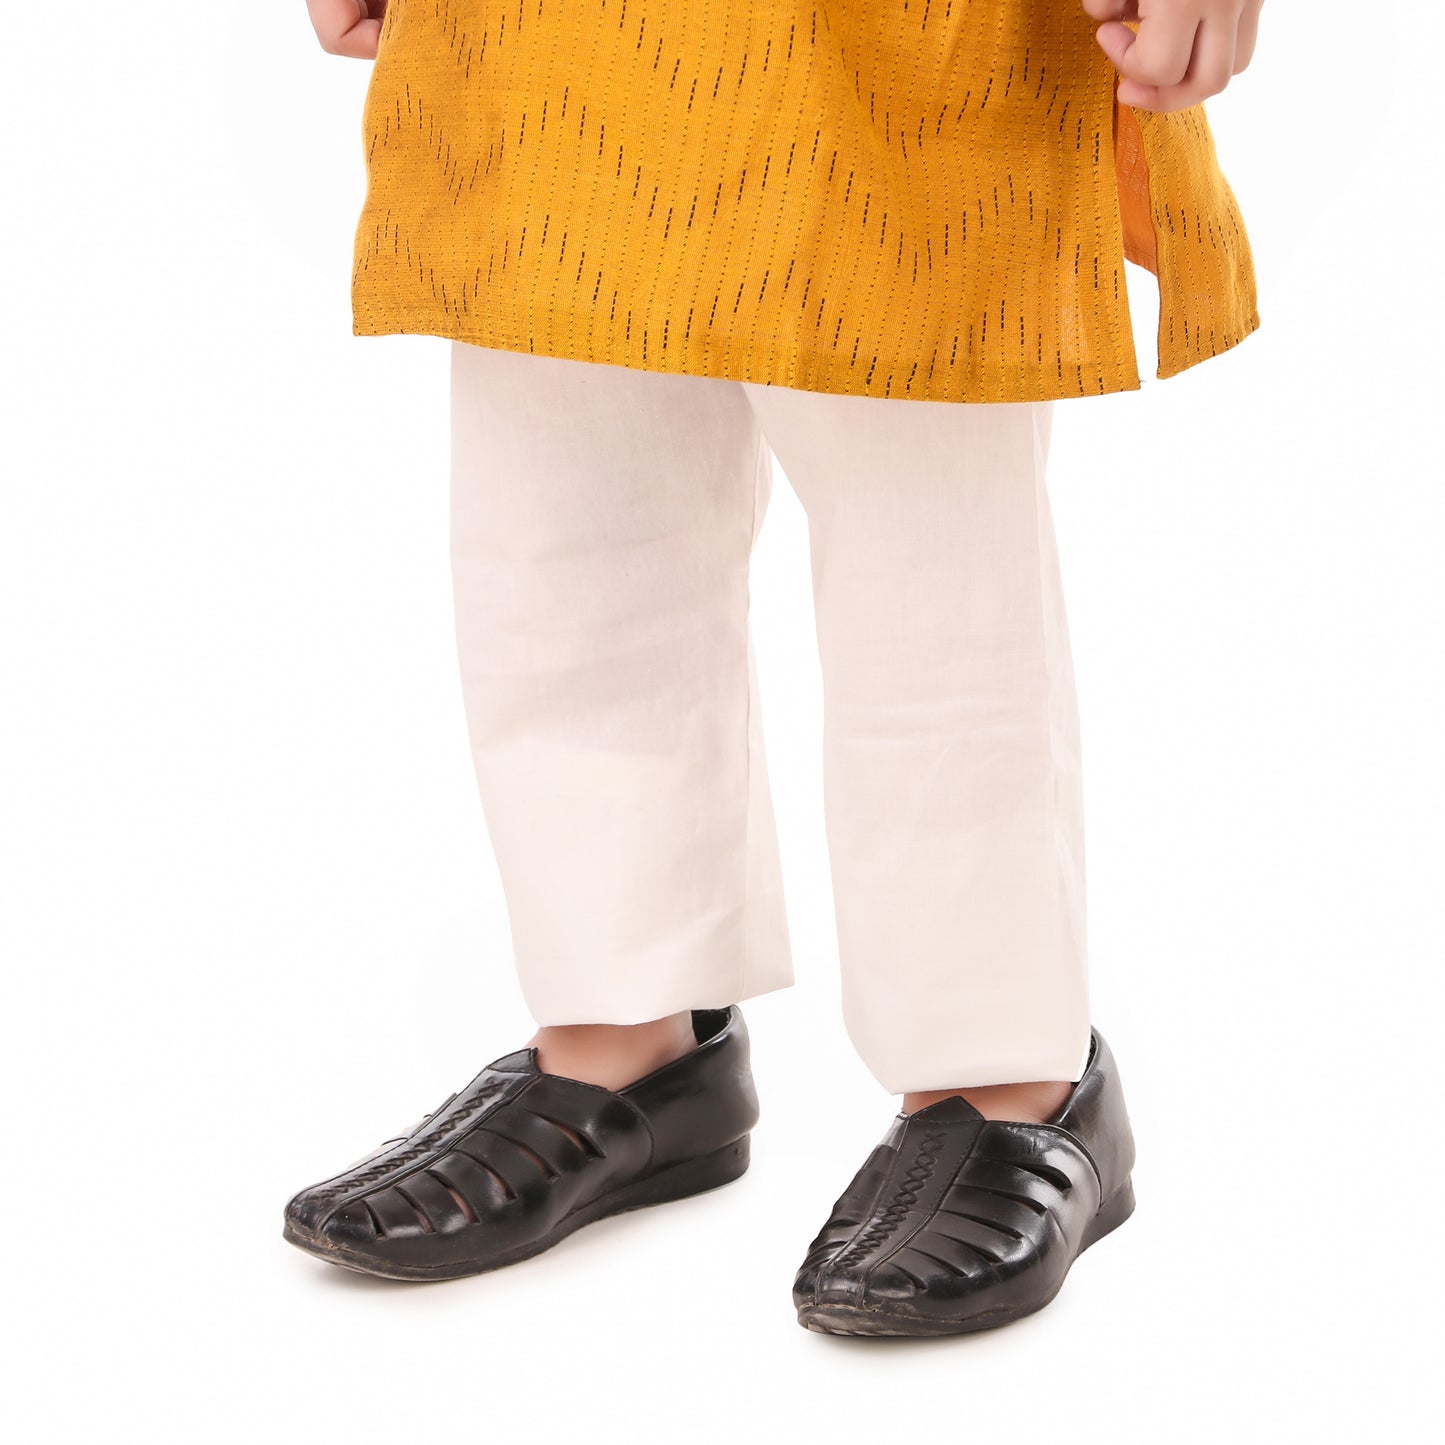 Mustard Kurta Pajama for Boys, Ages 0-16 Years, Cotton-Silk (with cotton lining)